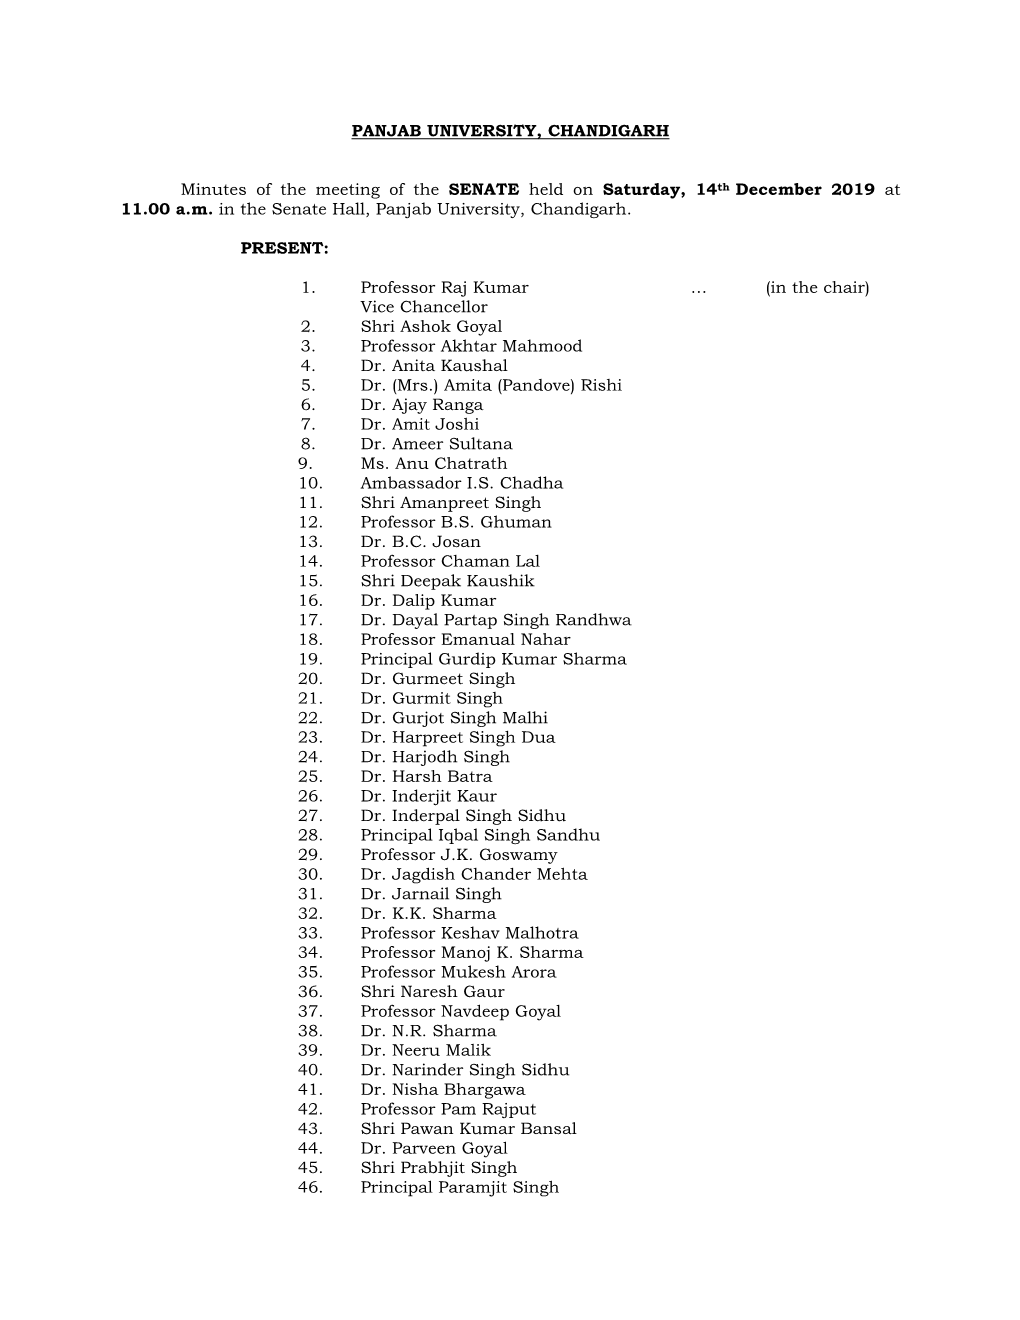 Senate Held on 14Th December 2019